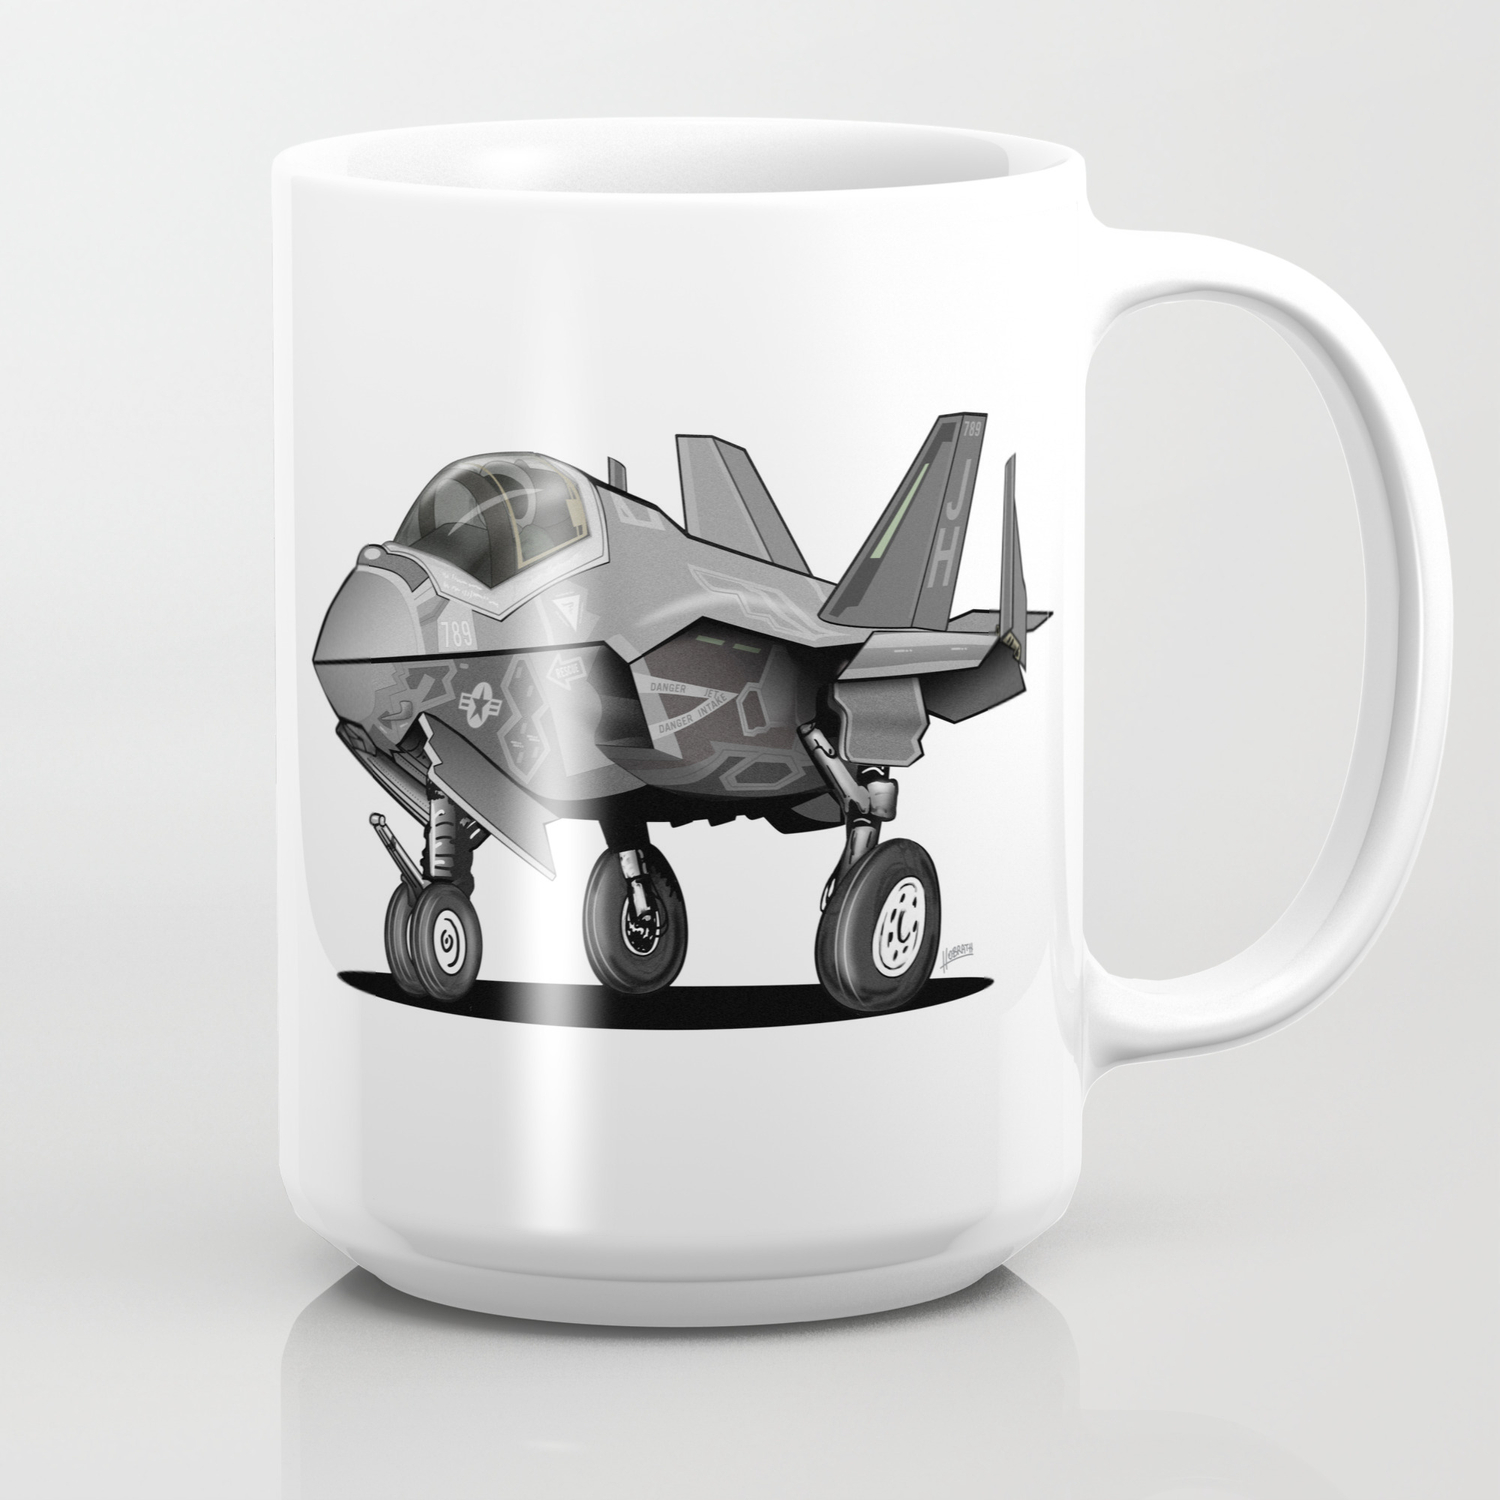 Coffee Mug Military Aircraft F-35 Lightning NEW 14 oz cup w/ gift box In Flight